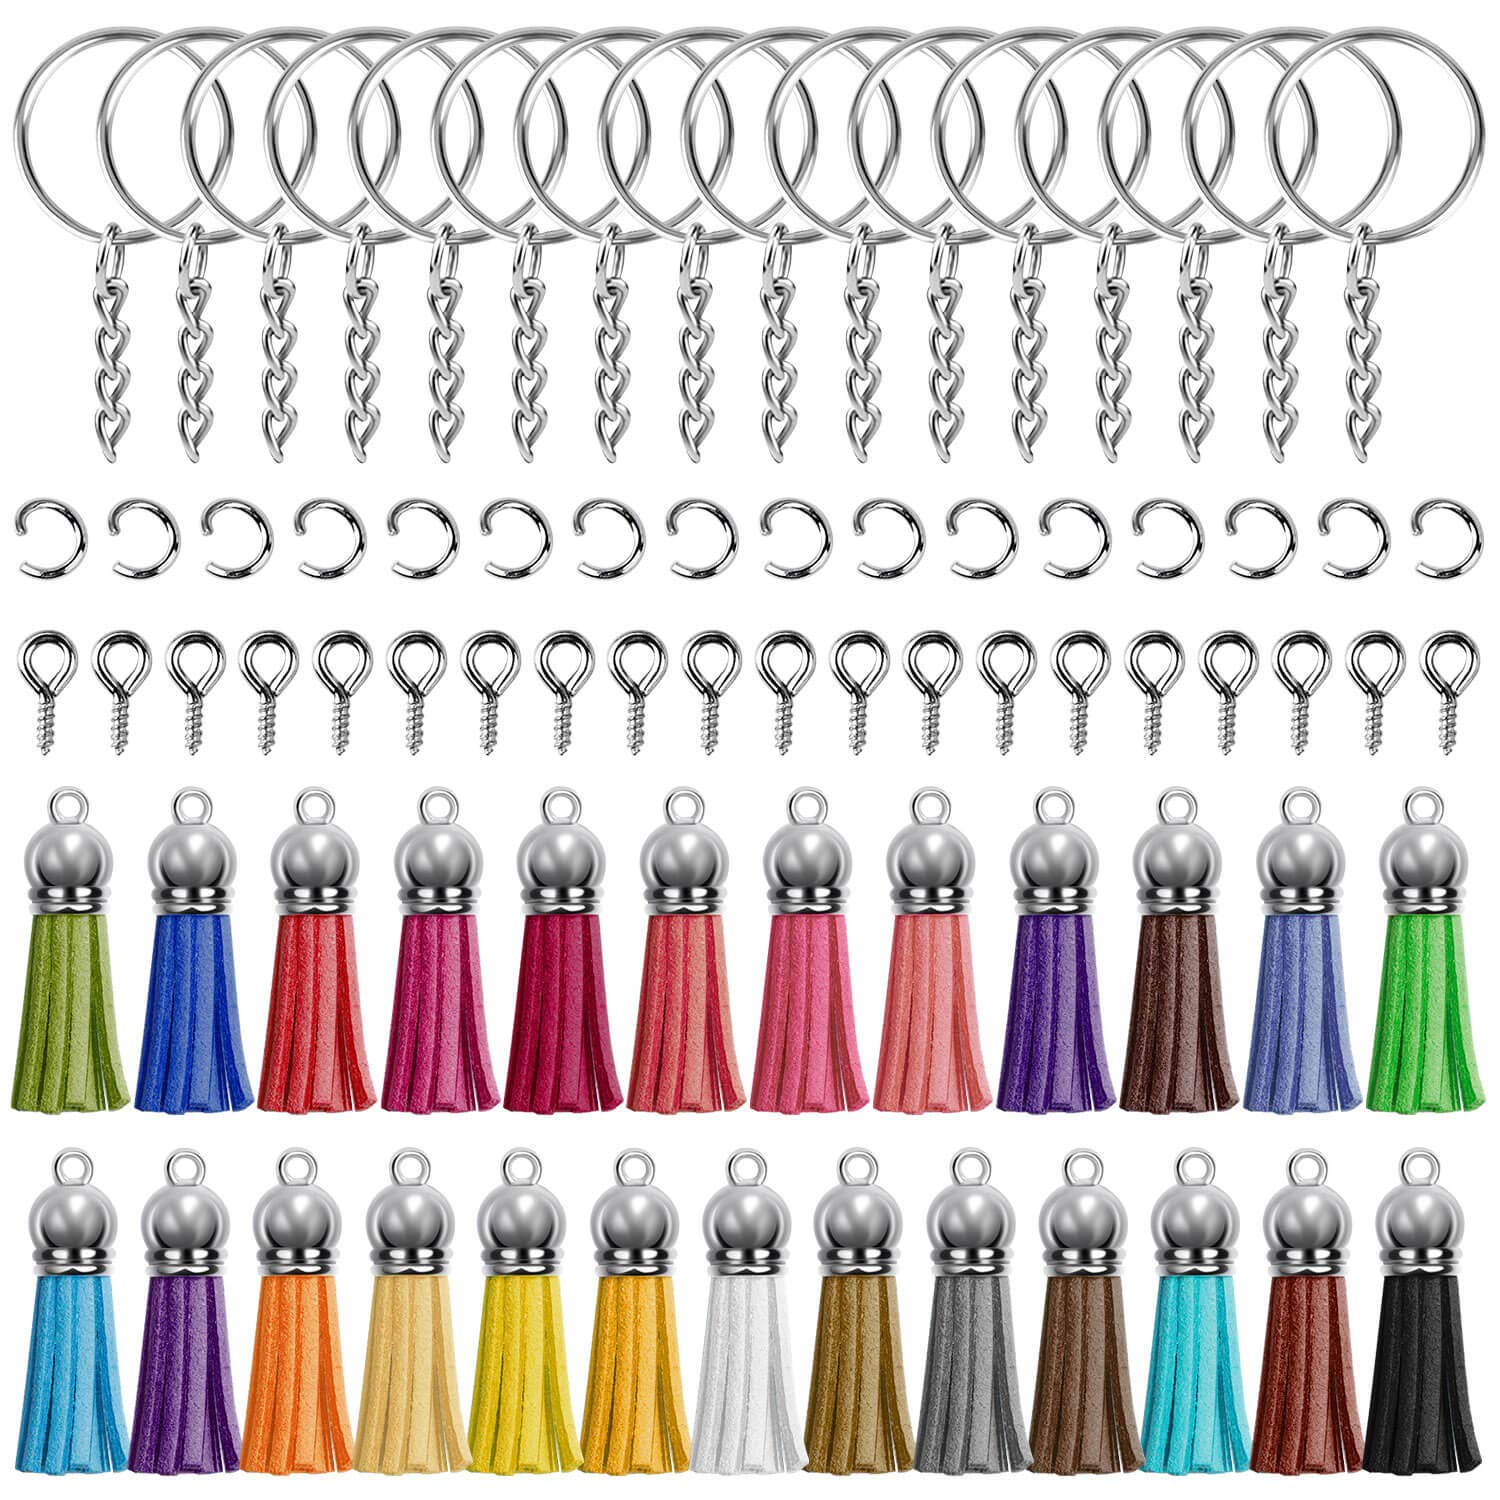 Keychain Tassles Cridoz 200pcs Bulk Keychain Rings Set Includes 50pcs  Tassels for Crafts 50pcs Key Chain